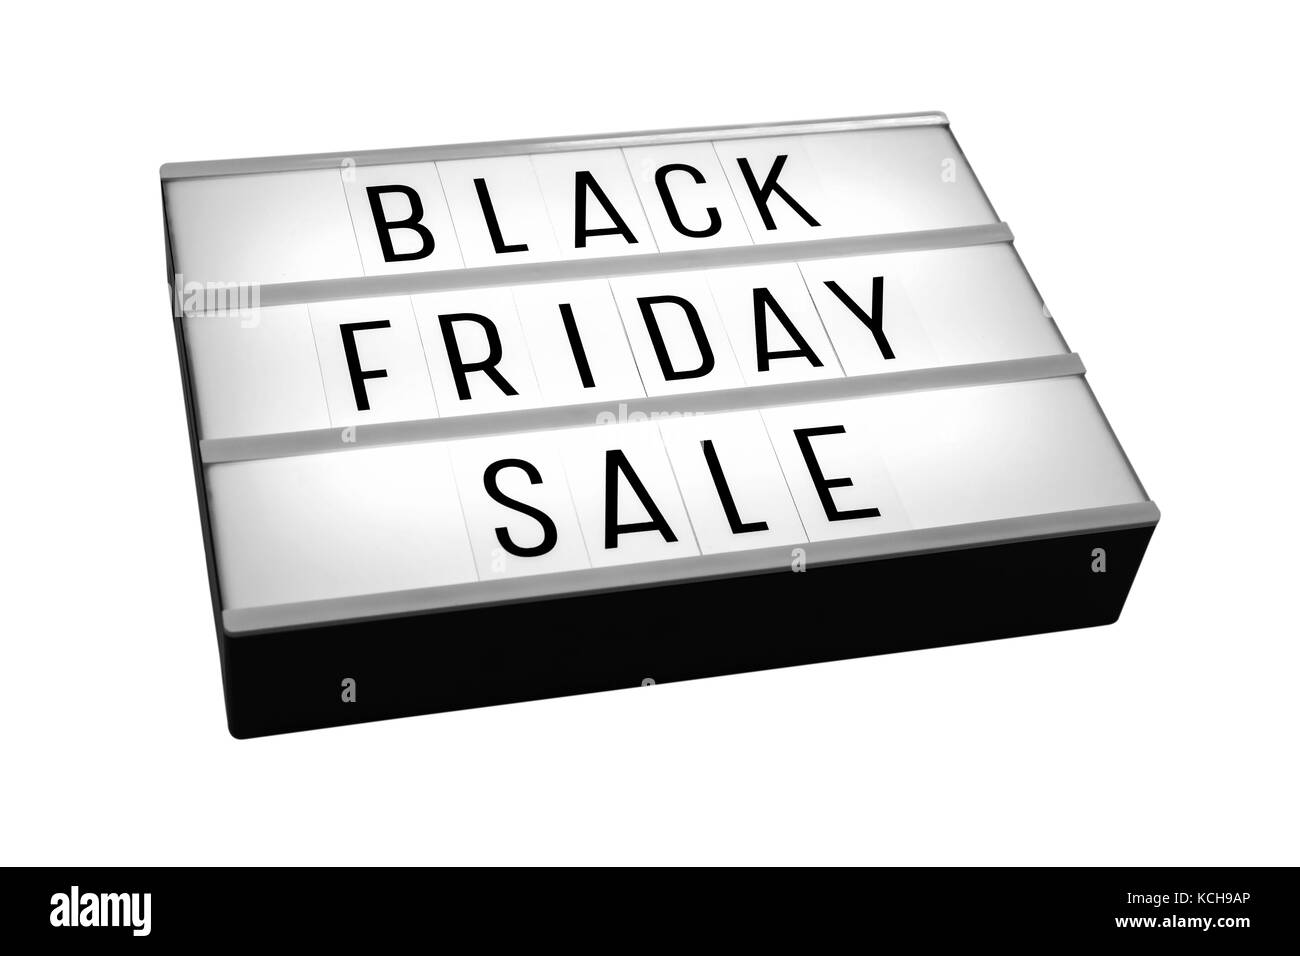 Black friday sale word on lightbox isolated on white background Stock Photo